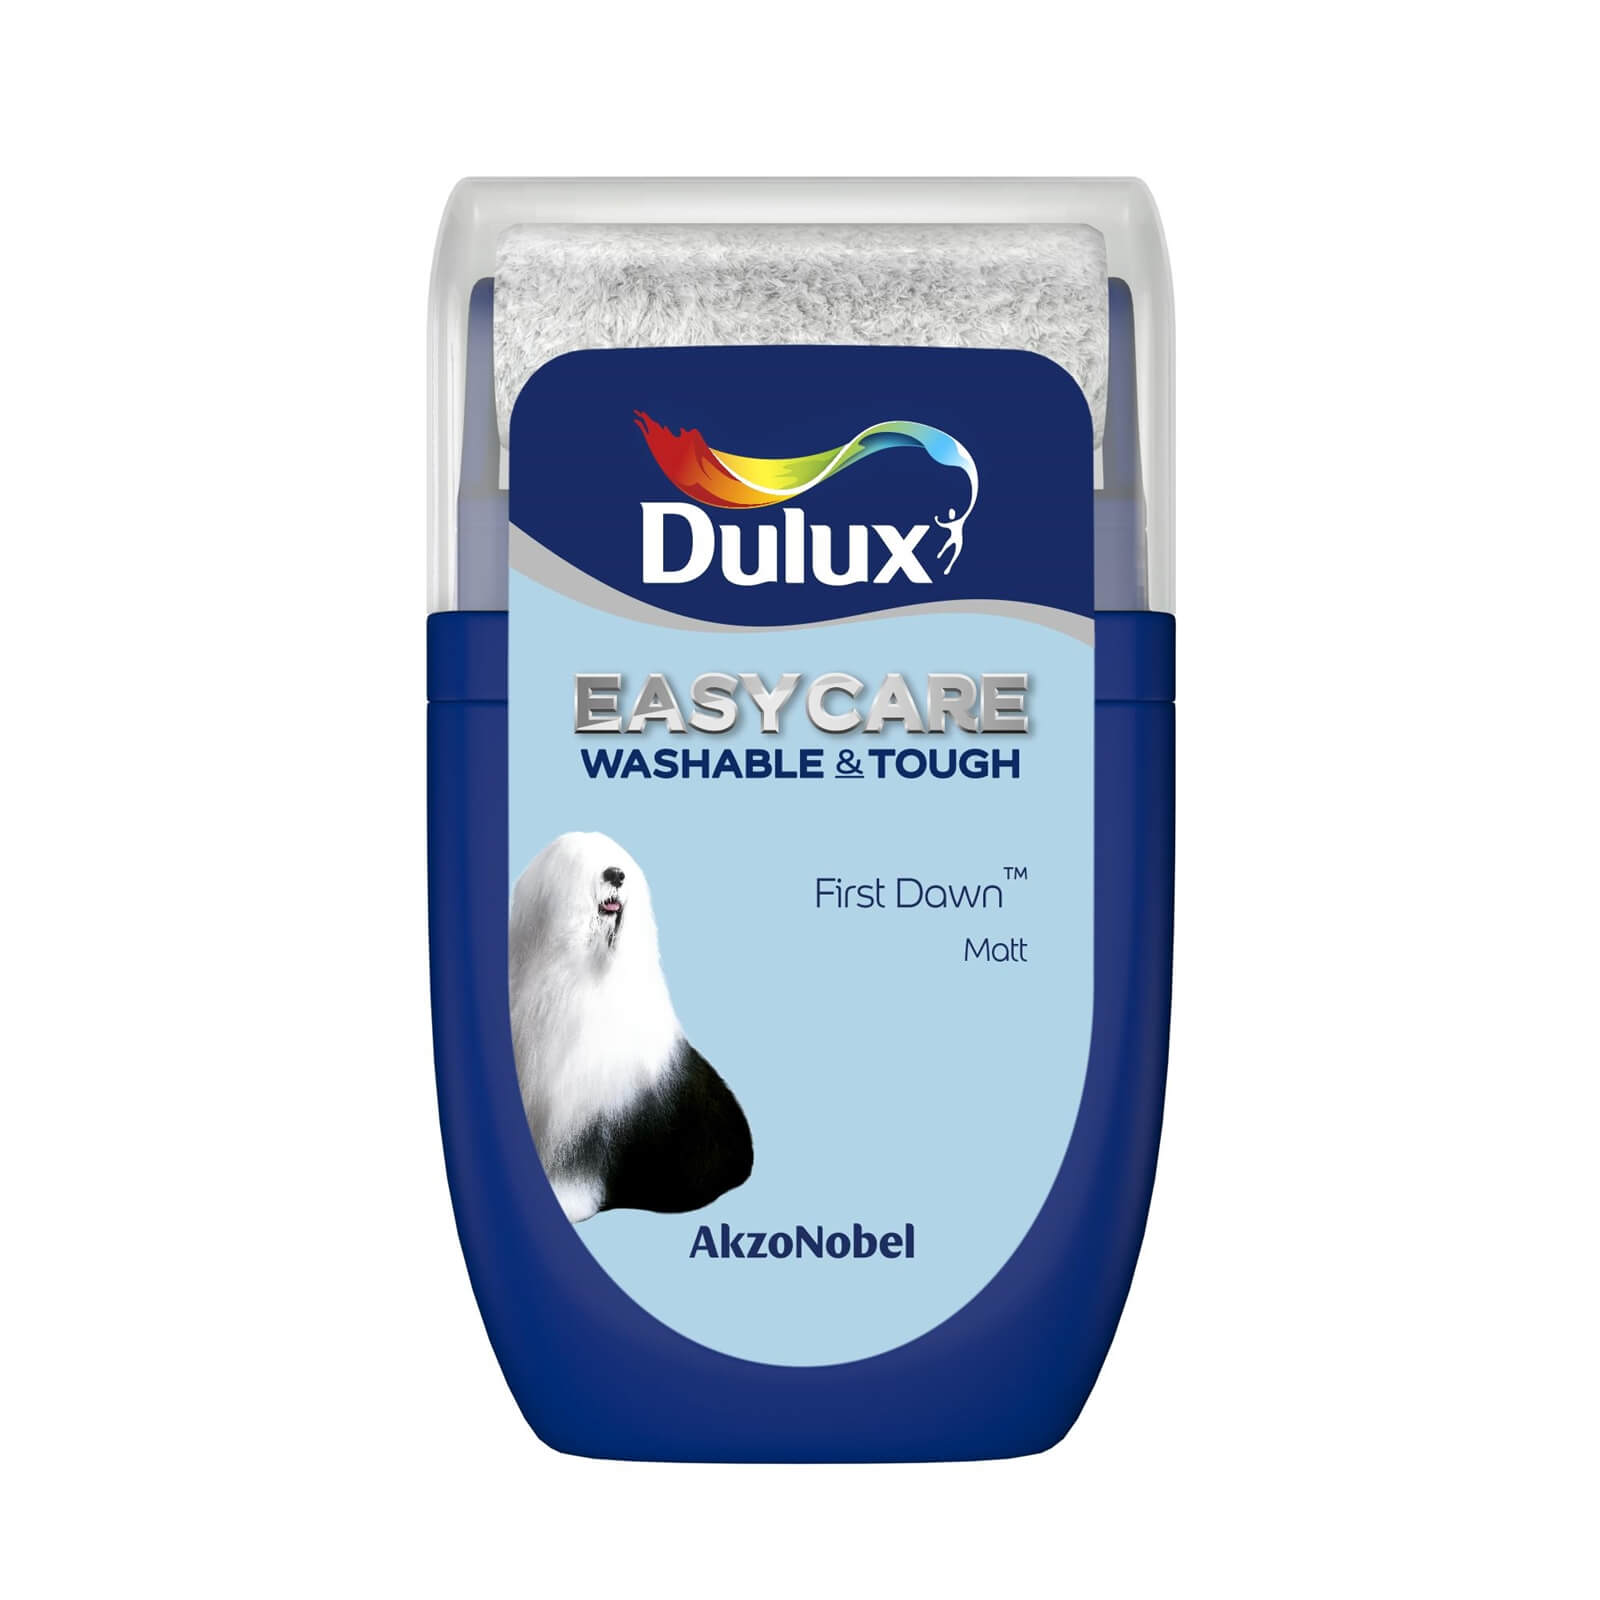 Dulux Easycare Washable & Tough Matt Paint First Dawn - Tester 30ml